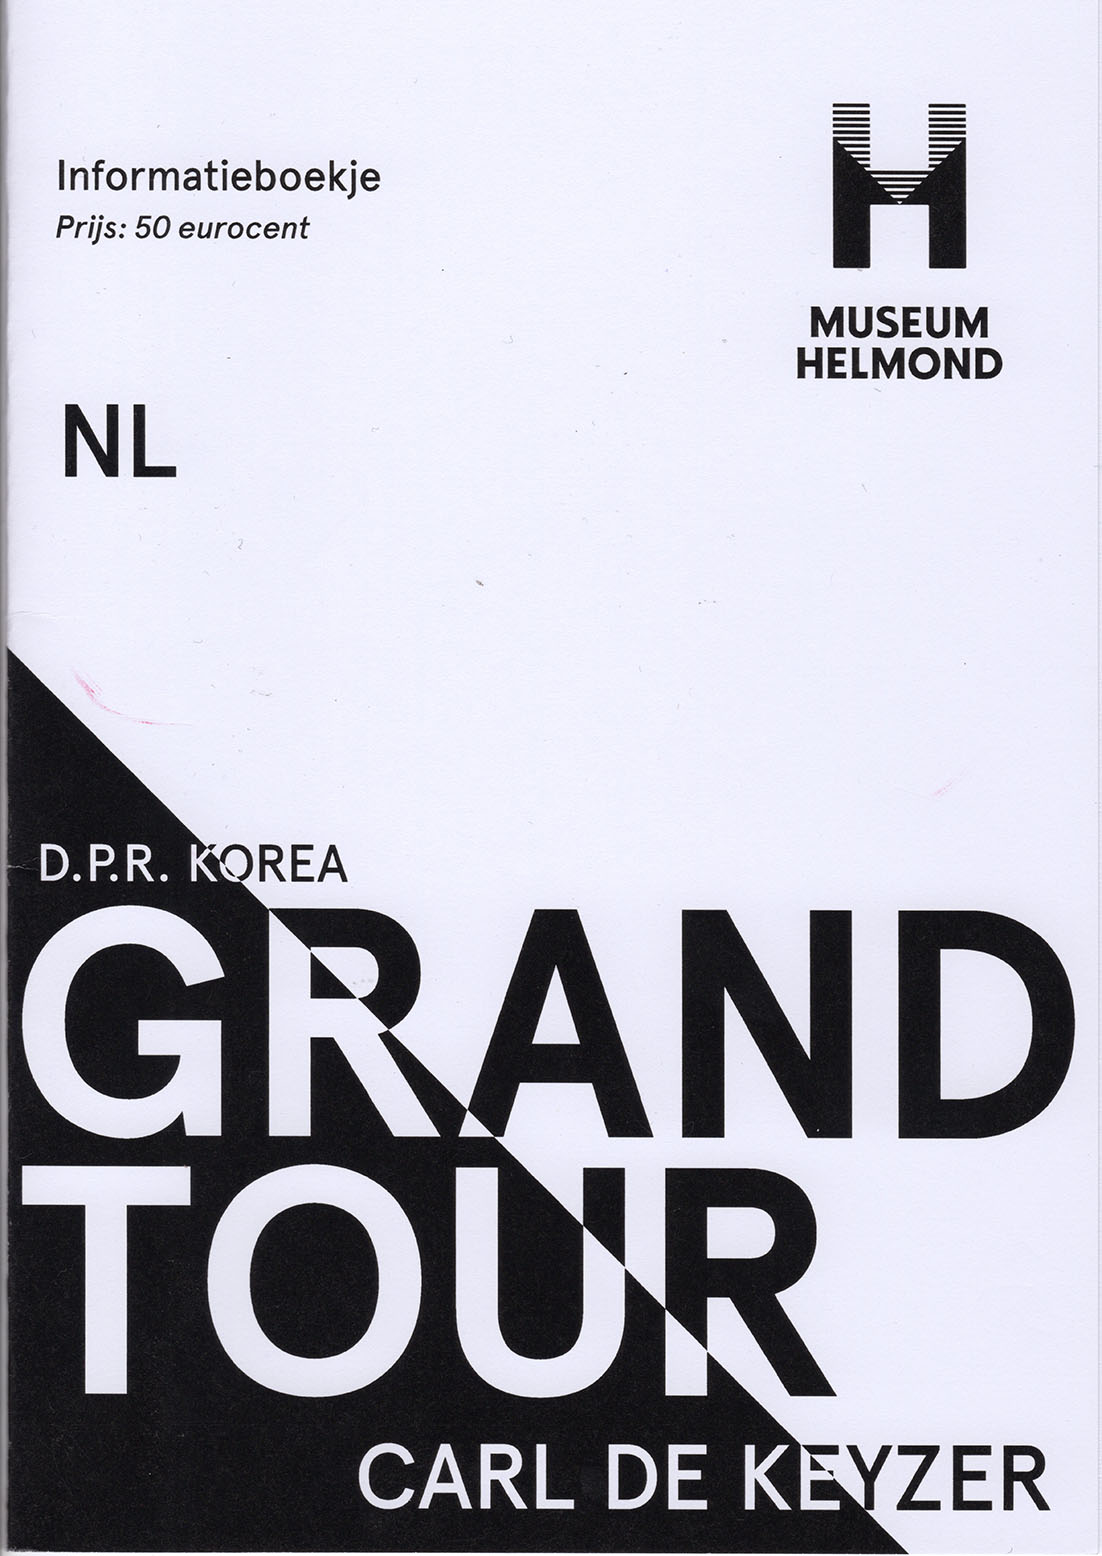 Helmond Museum (DPRK)